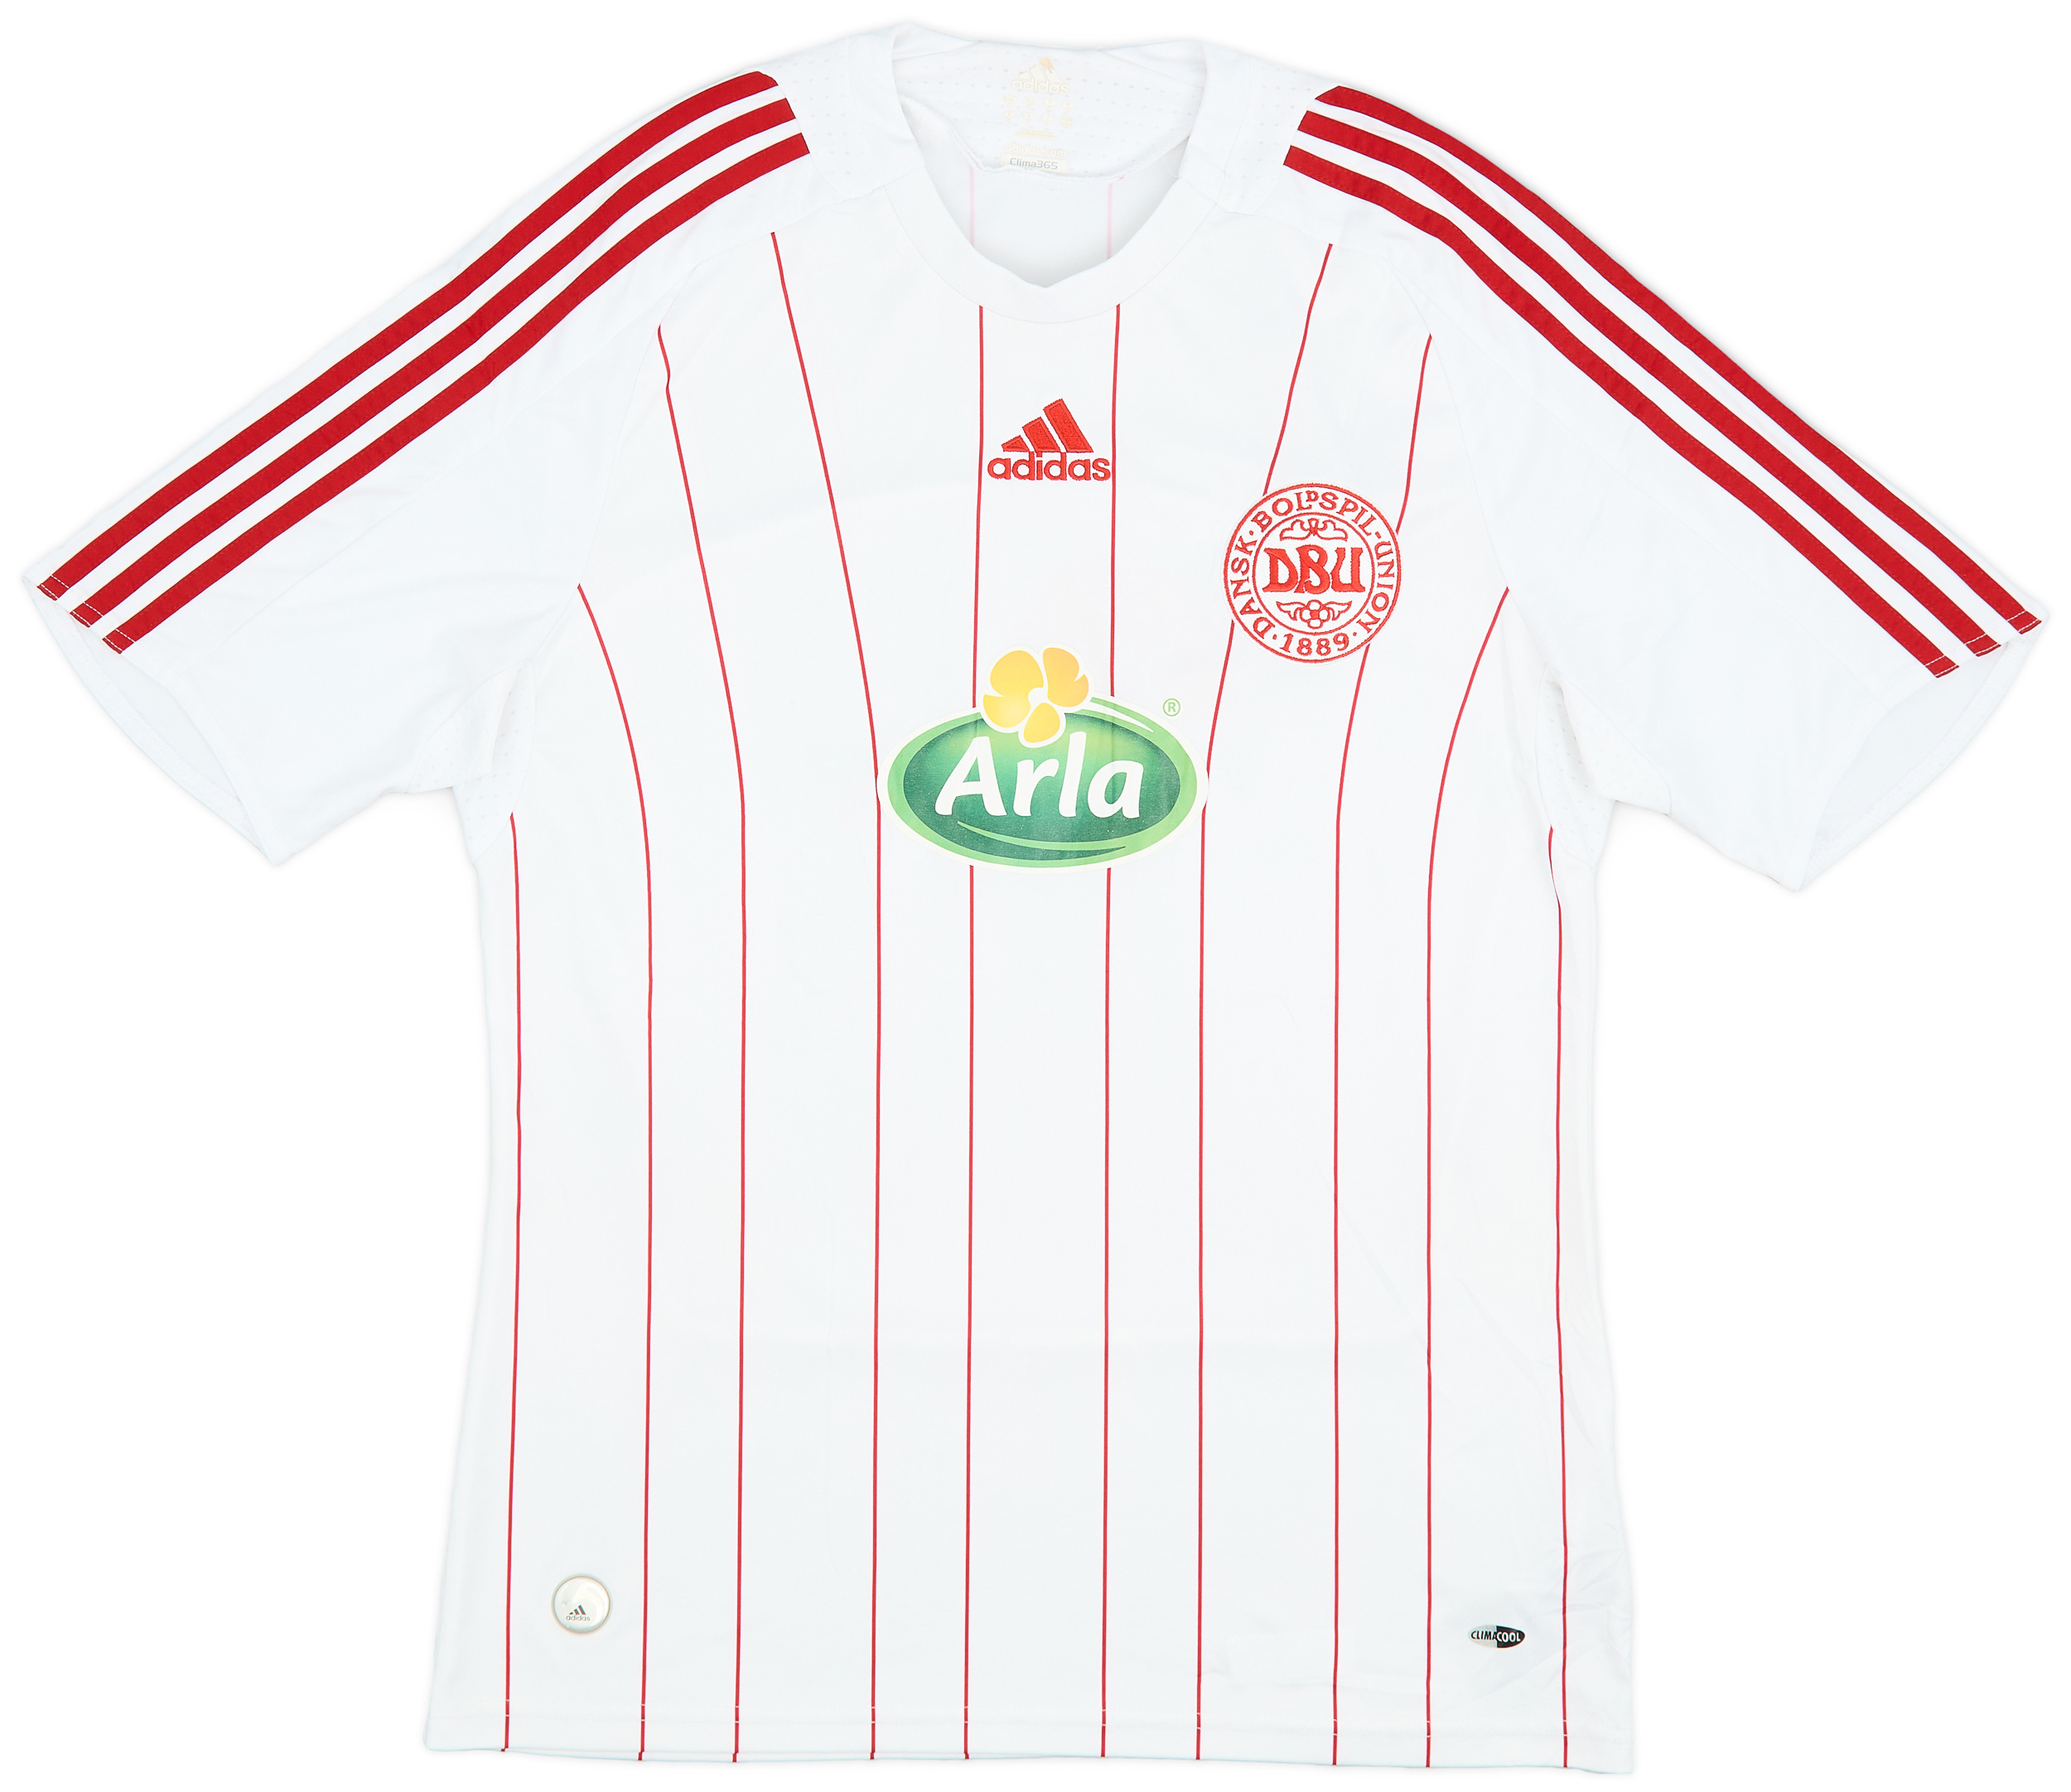 2008-10 Denmark 'Fodboldskole 2009' Away Shirt - 8/10 - ()